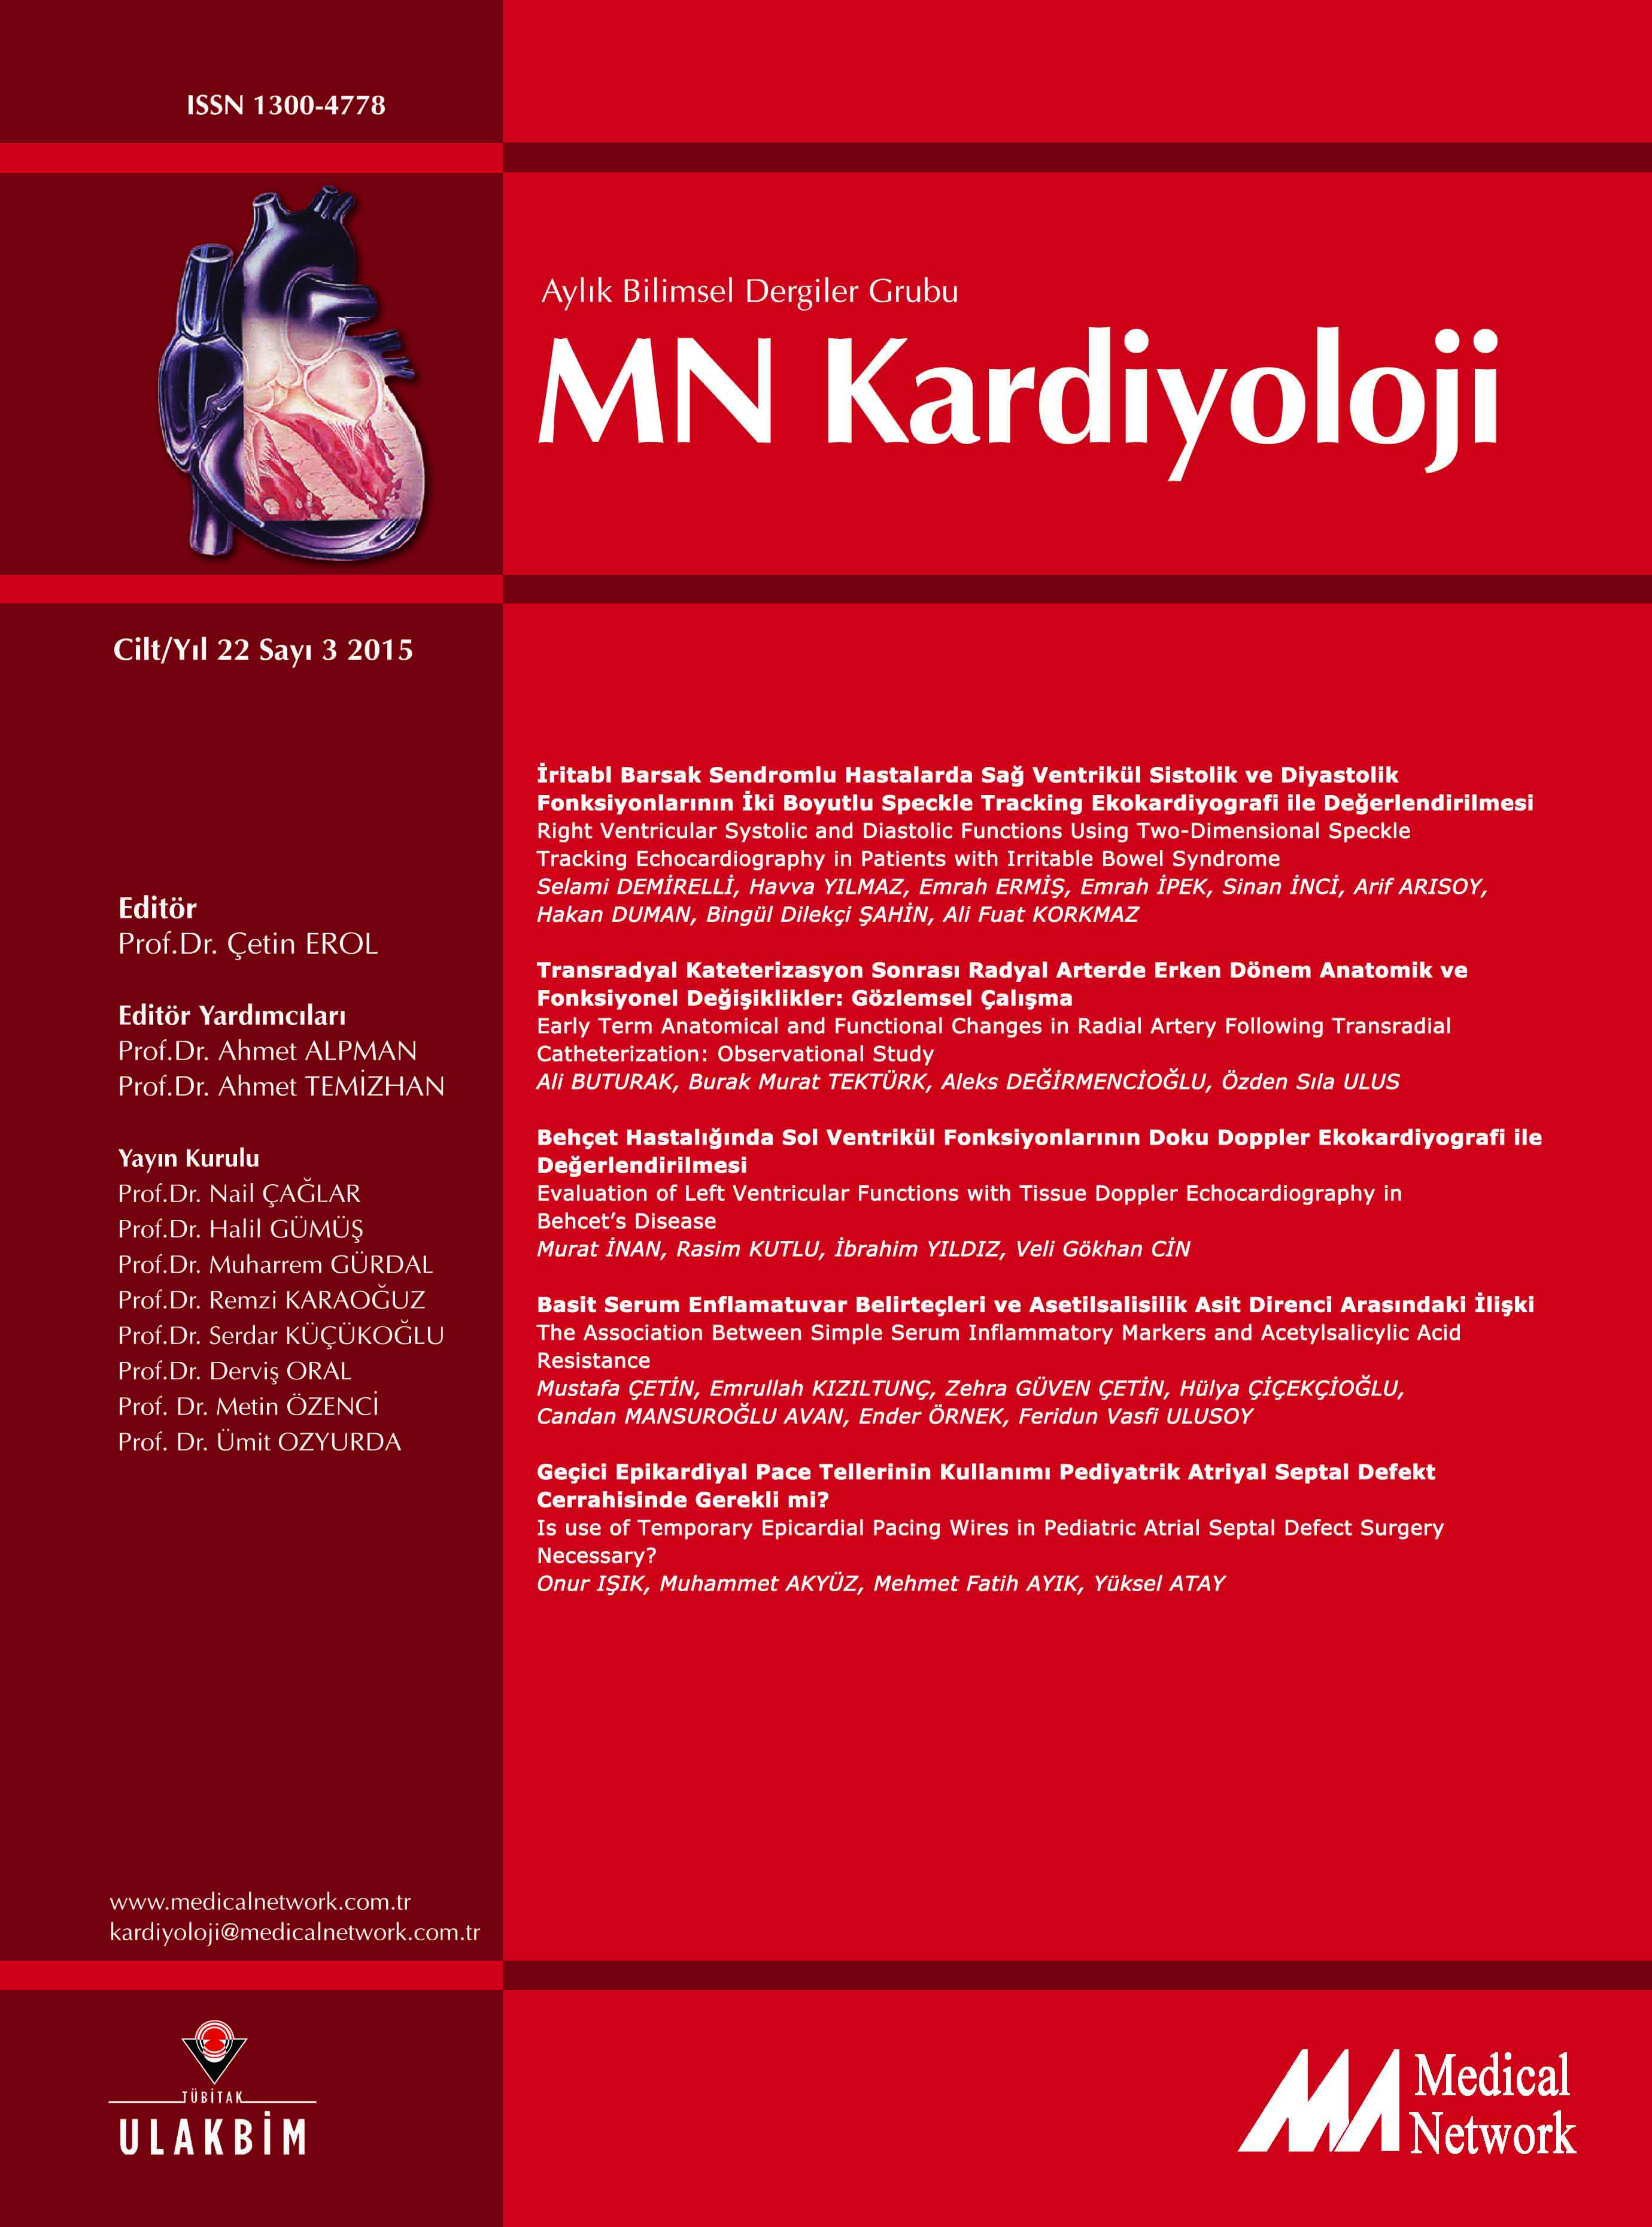 <p>MN Kardiyoloji Cilt: 22 Say: 3 2015 (MN Cardiology Volume: 22 No: 3 2015)</p>